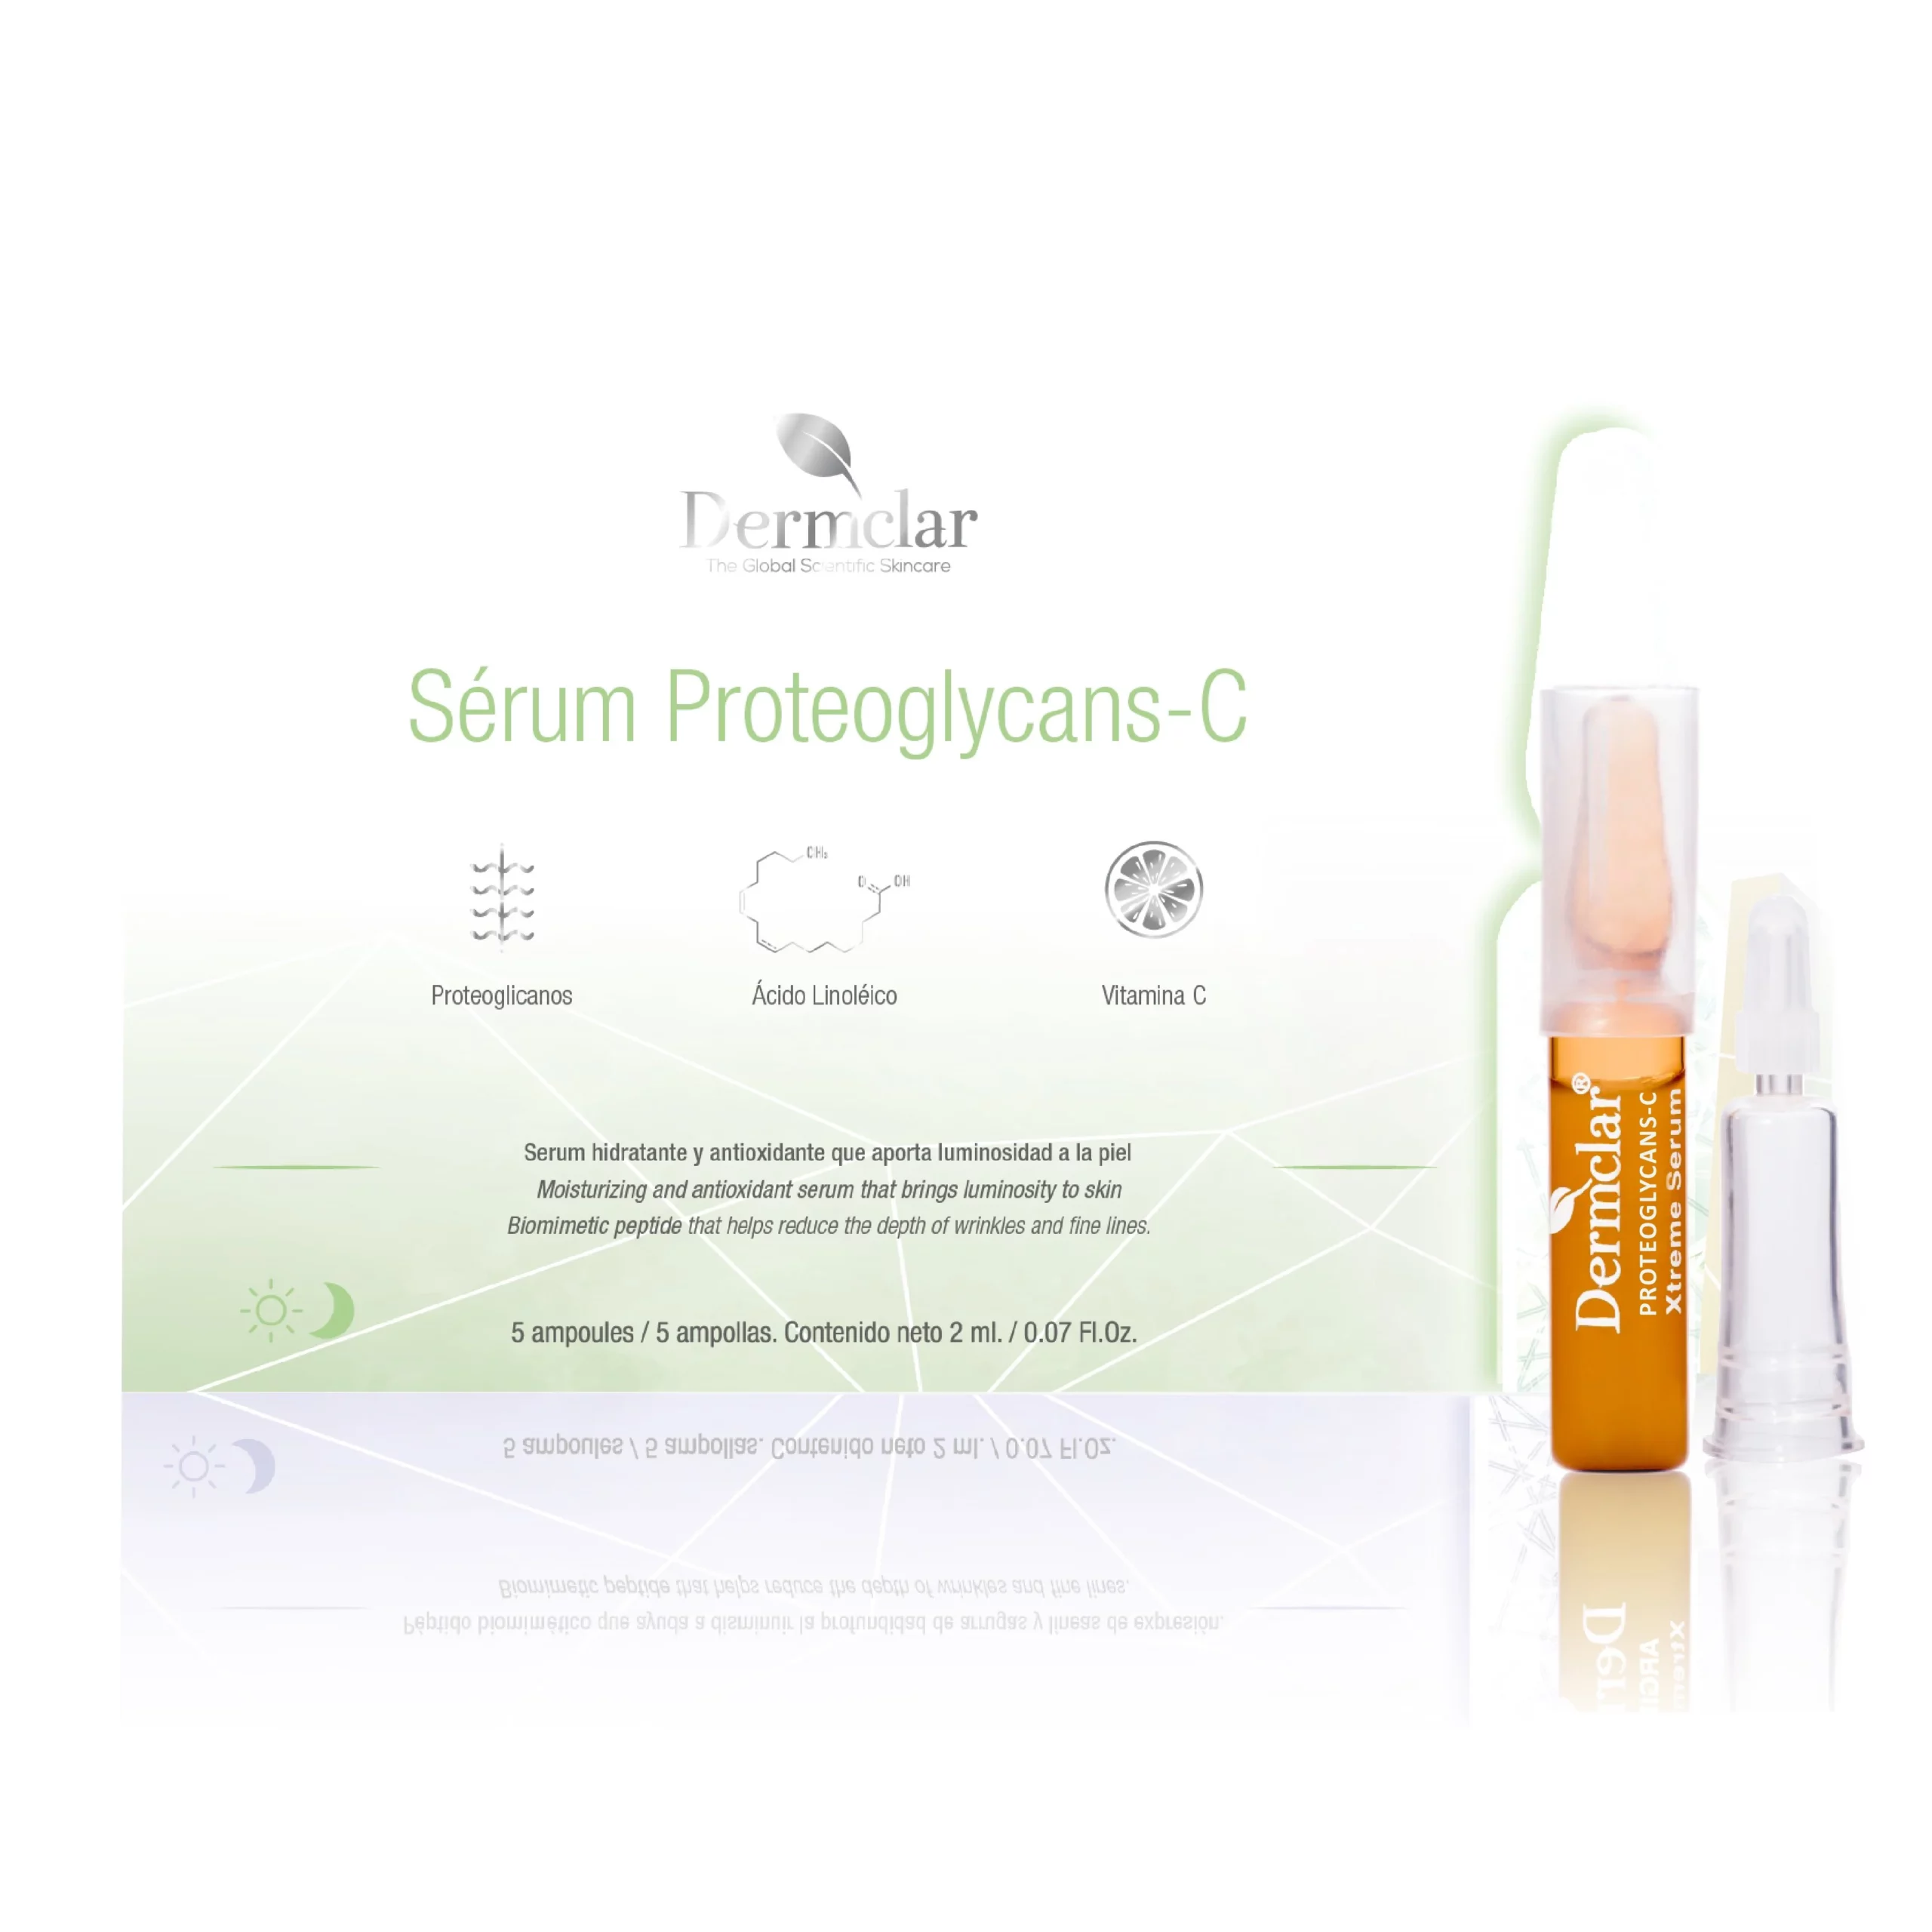 Serum Proteoglycans-C